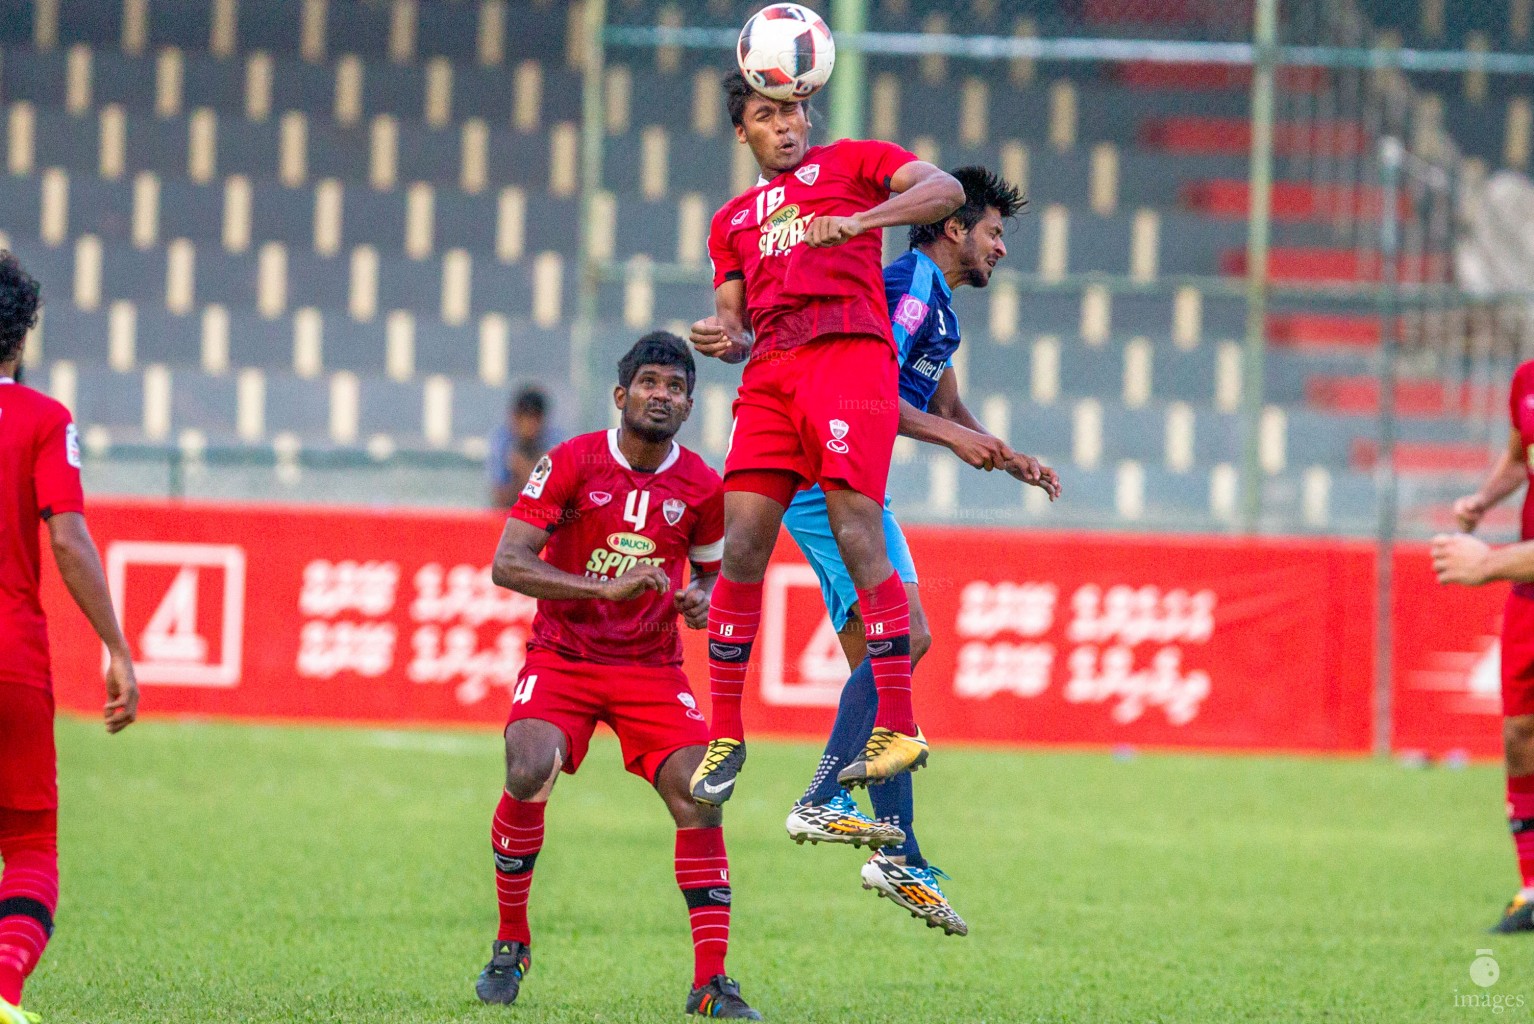 New Radiant SC vs TC sports club Ooredoo Dhivehi Premier League 2017, held in Male , Maldives. Sunday, November  19th, 2017. ( Images.mv Photo : Abdulla Abeedh )